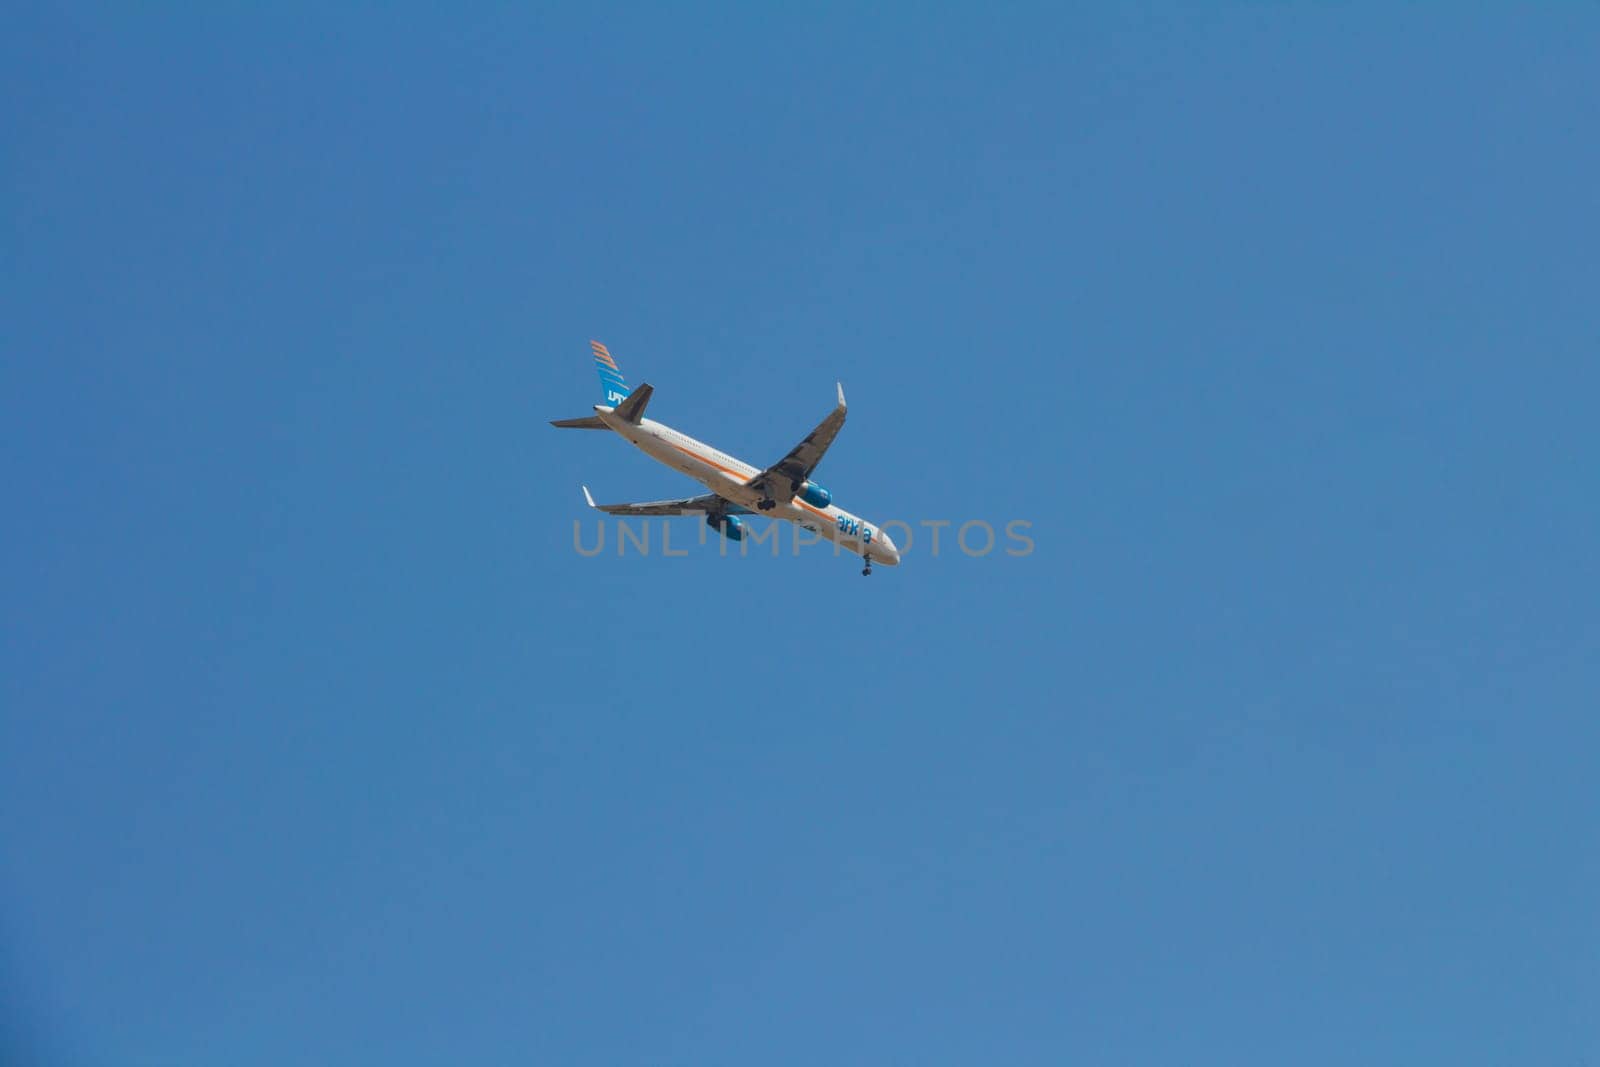 Tel aviv, Israel - October 7, 2017: Arkia airline commercial plane flying in the blue sky going for a landing. Arkia is an Israeli airline.